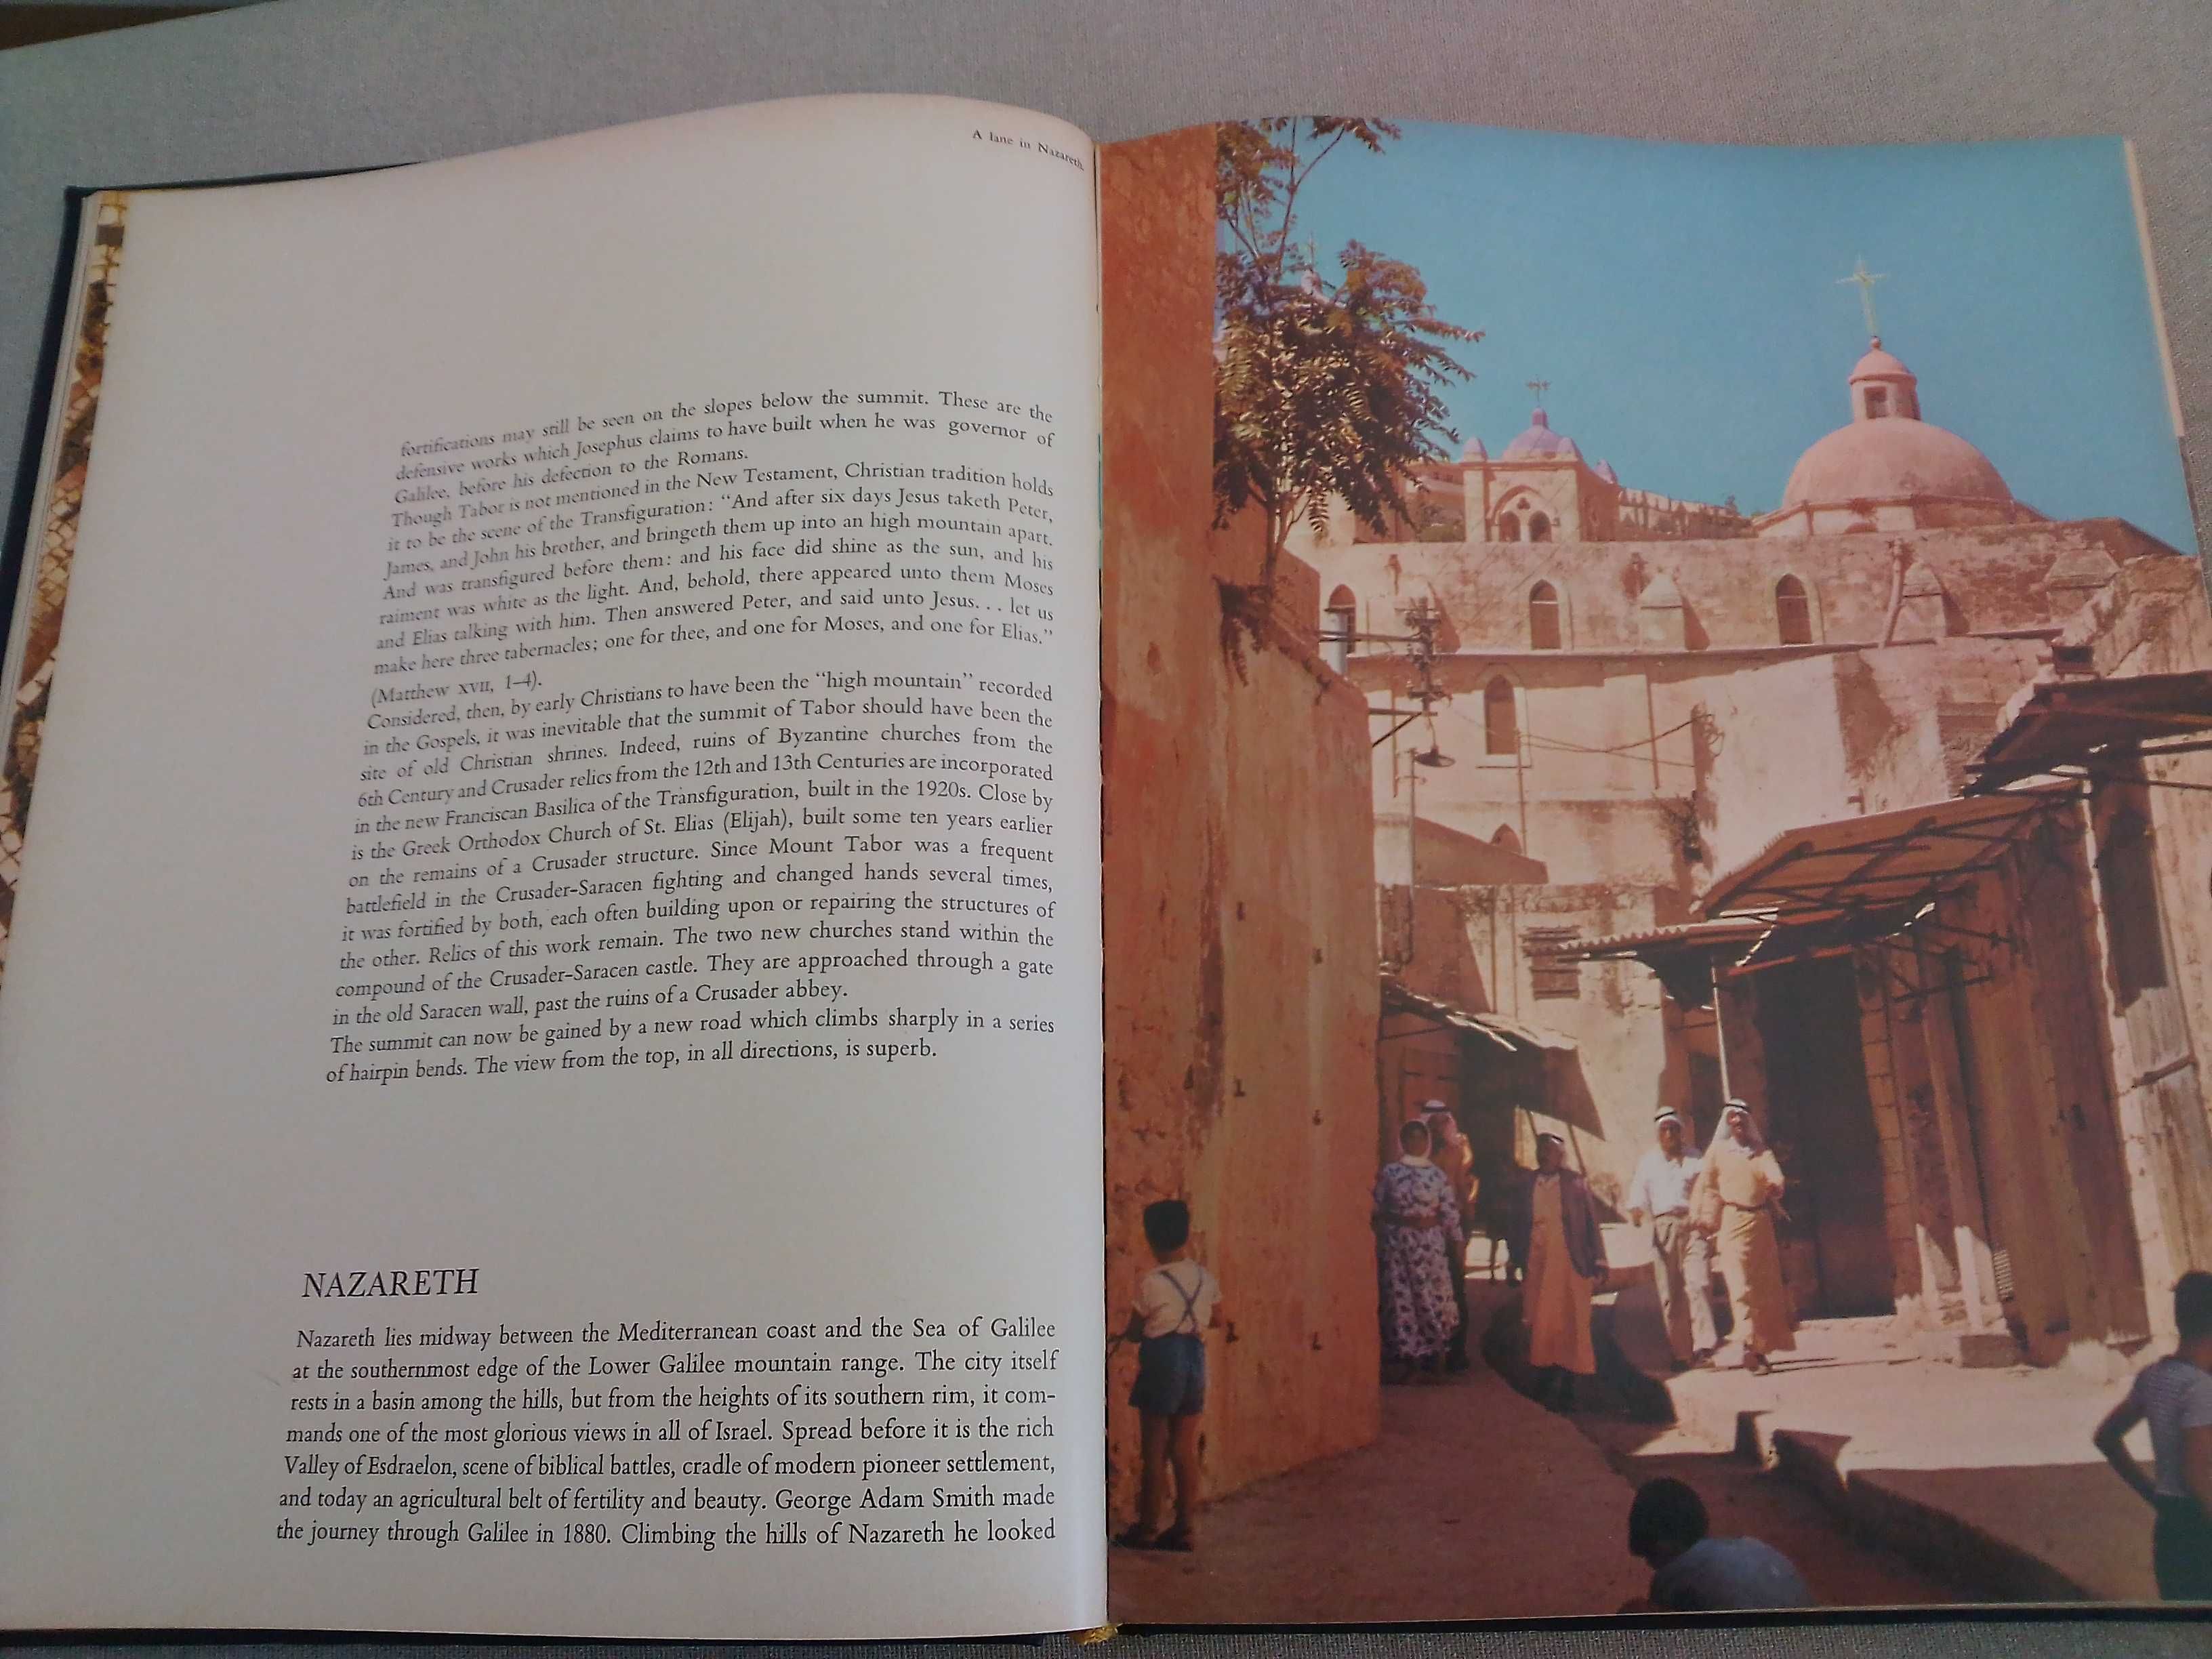 Historical Sites in Israel - Livro raro